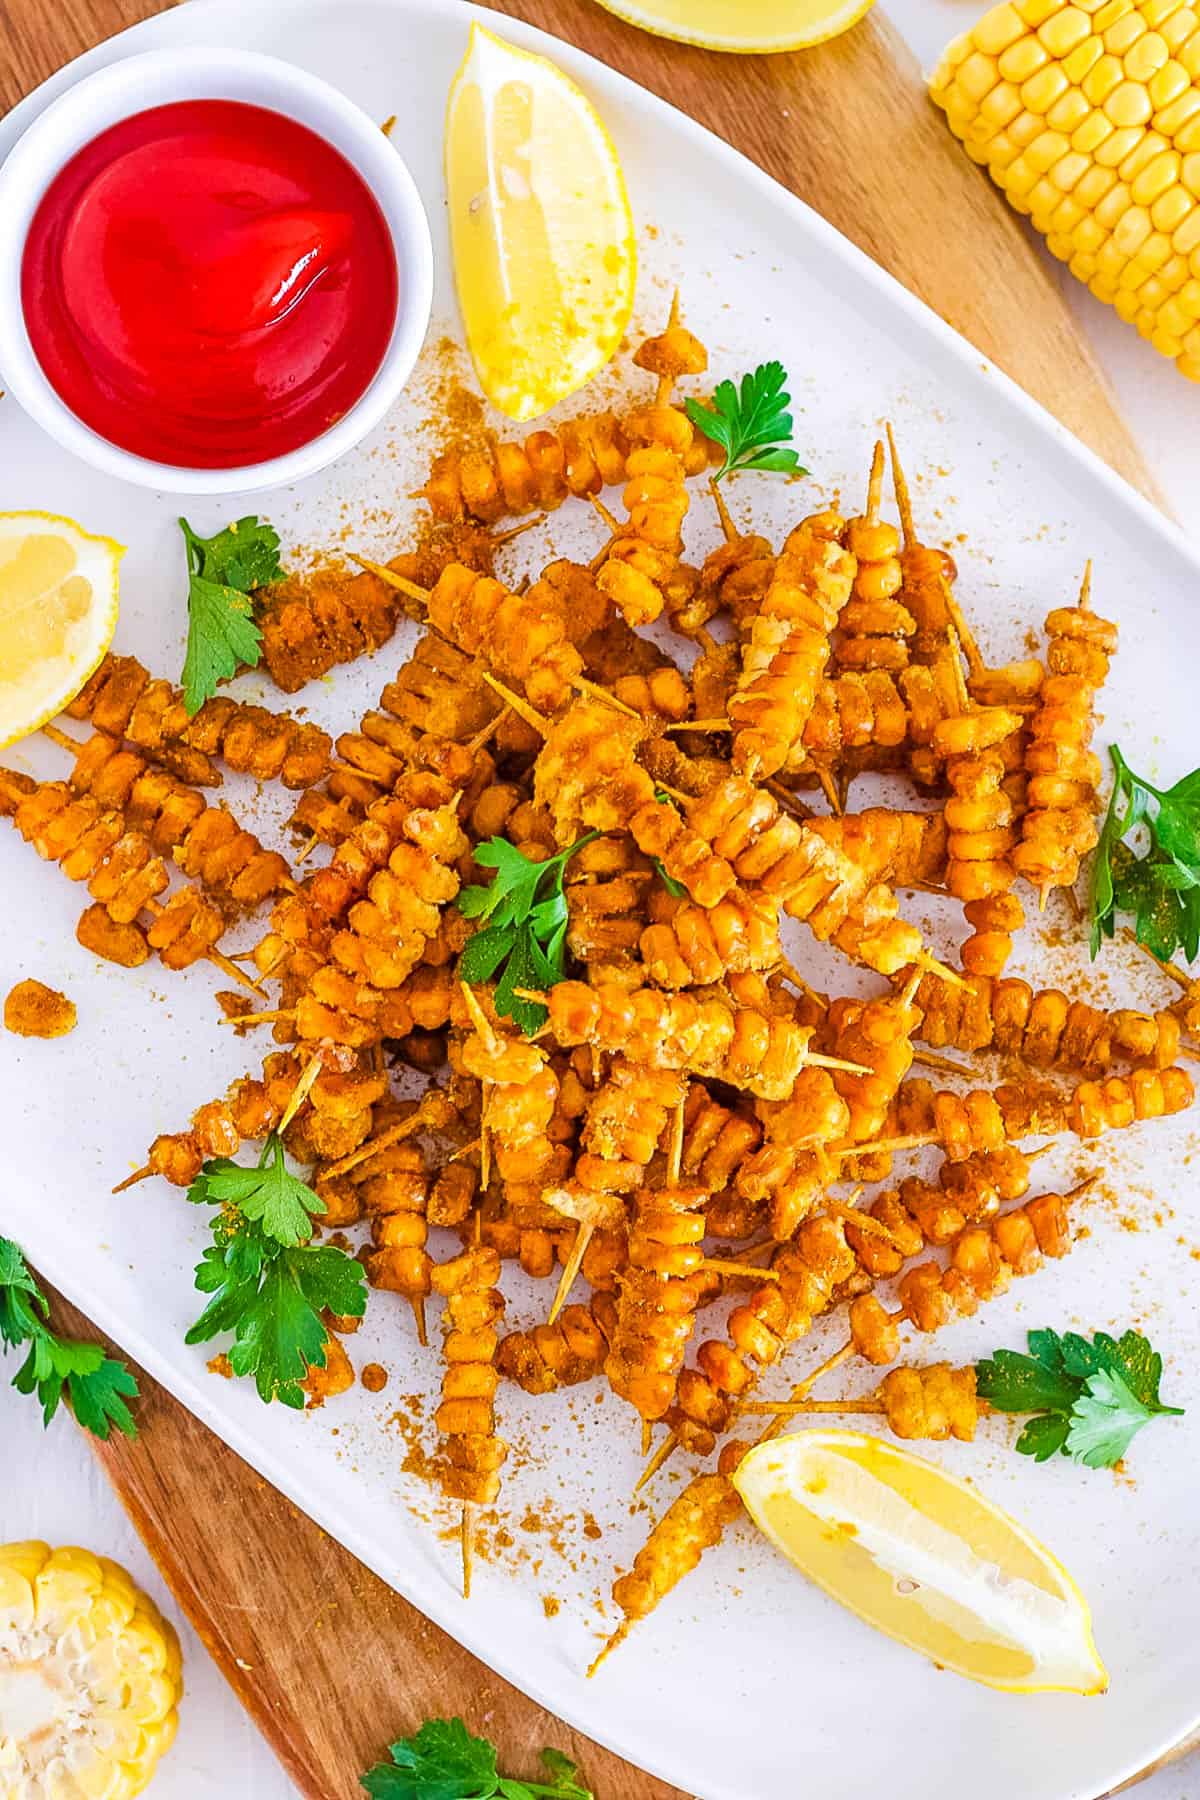 easy vegan gluten free healthy loaded corn fries recipe - masala corn fries on a white plate.